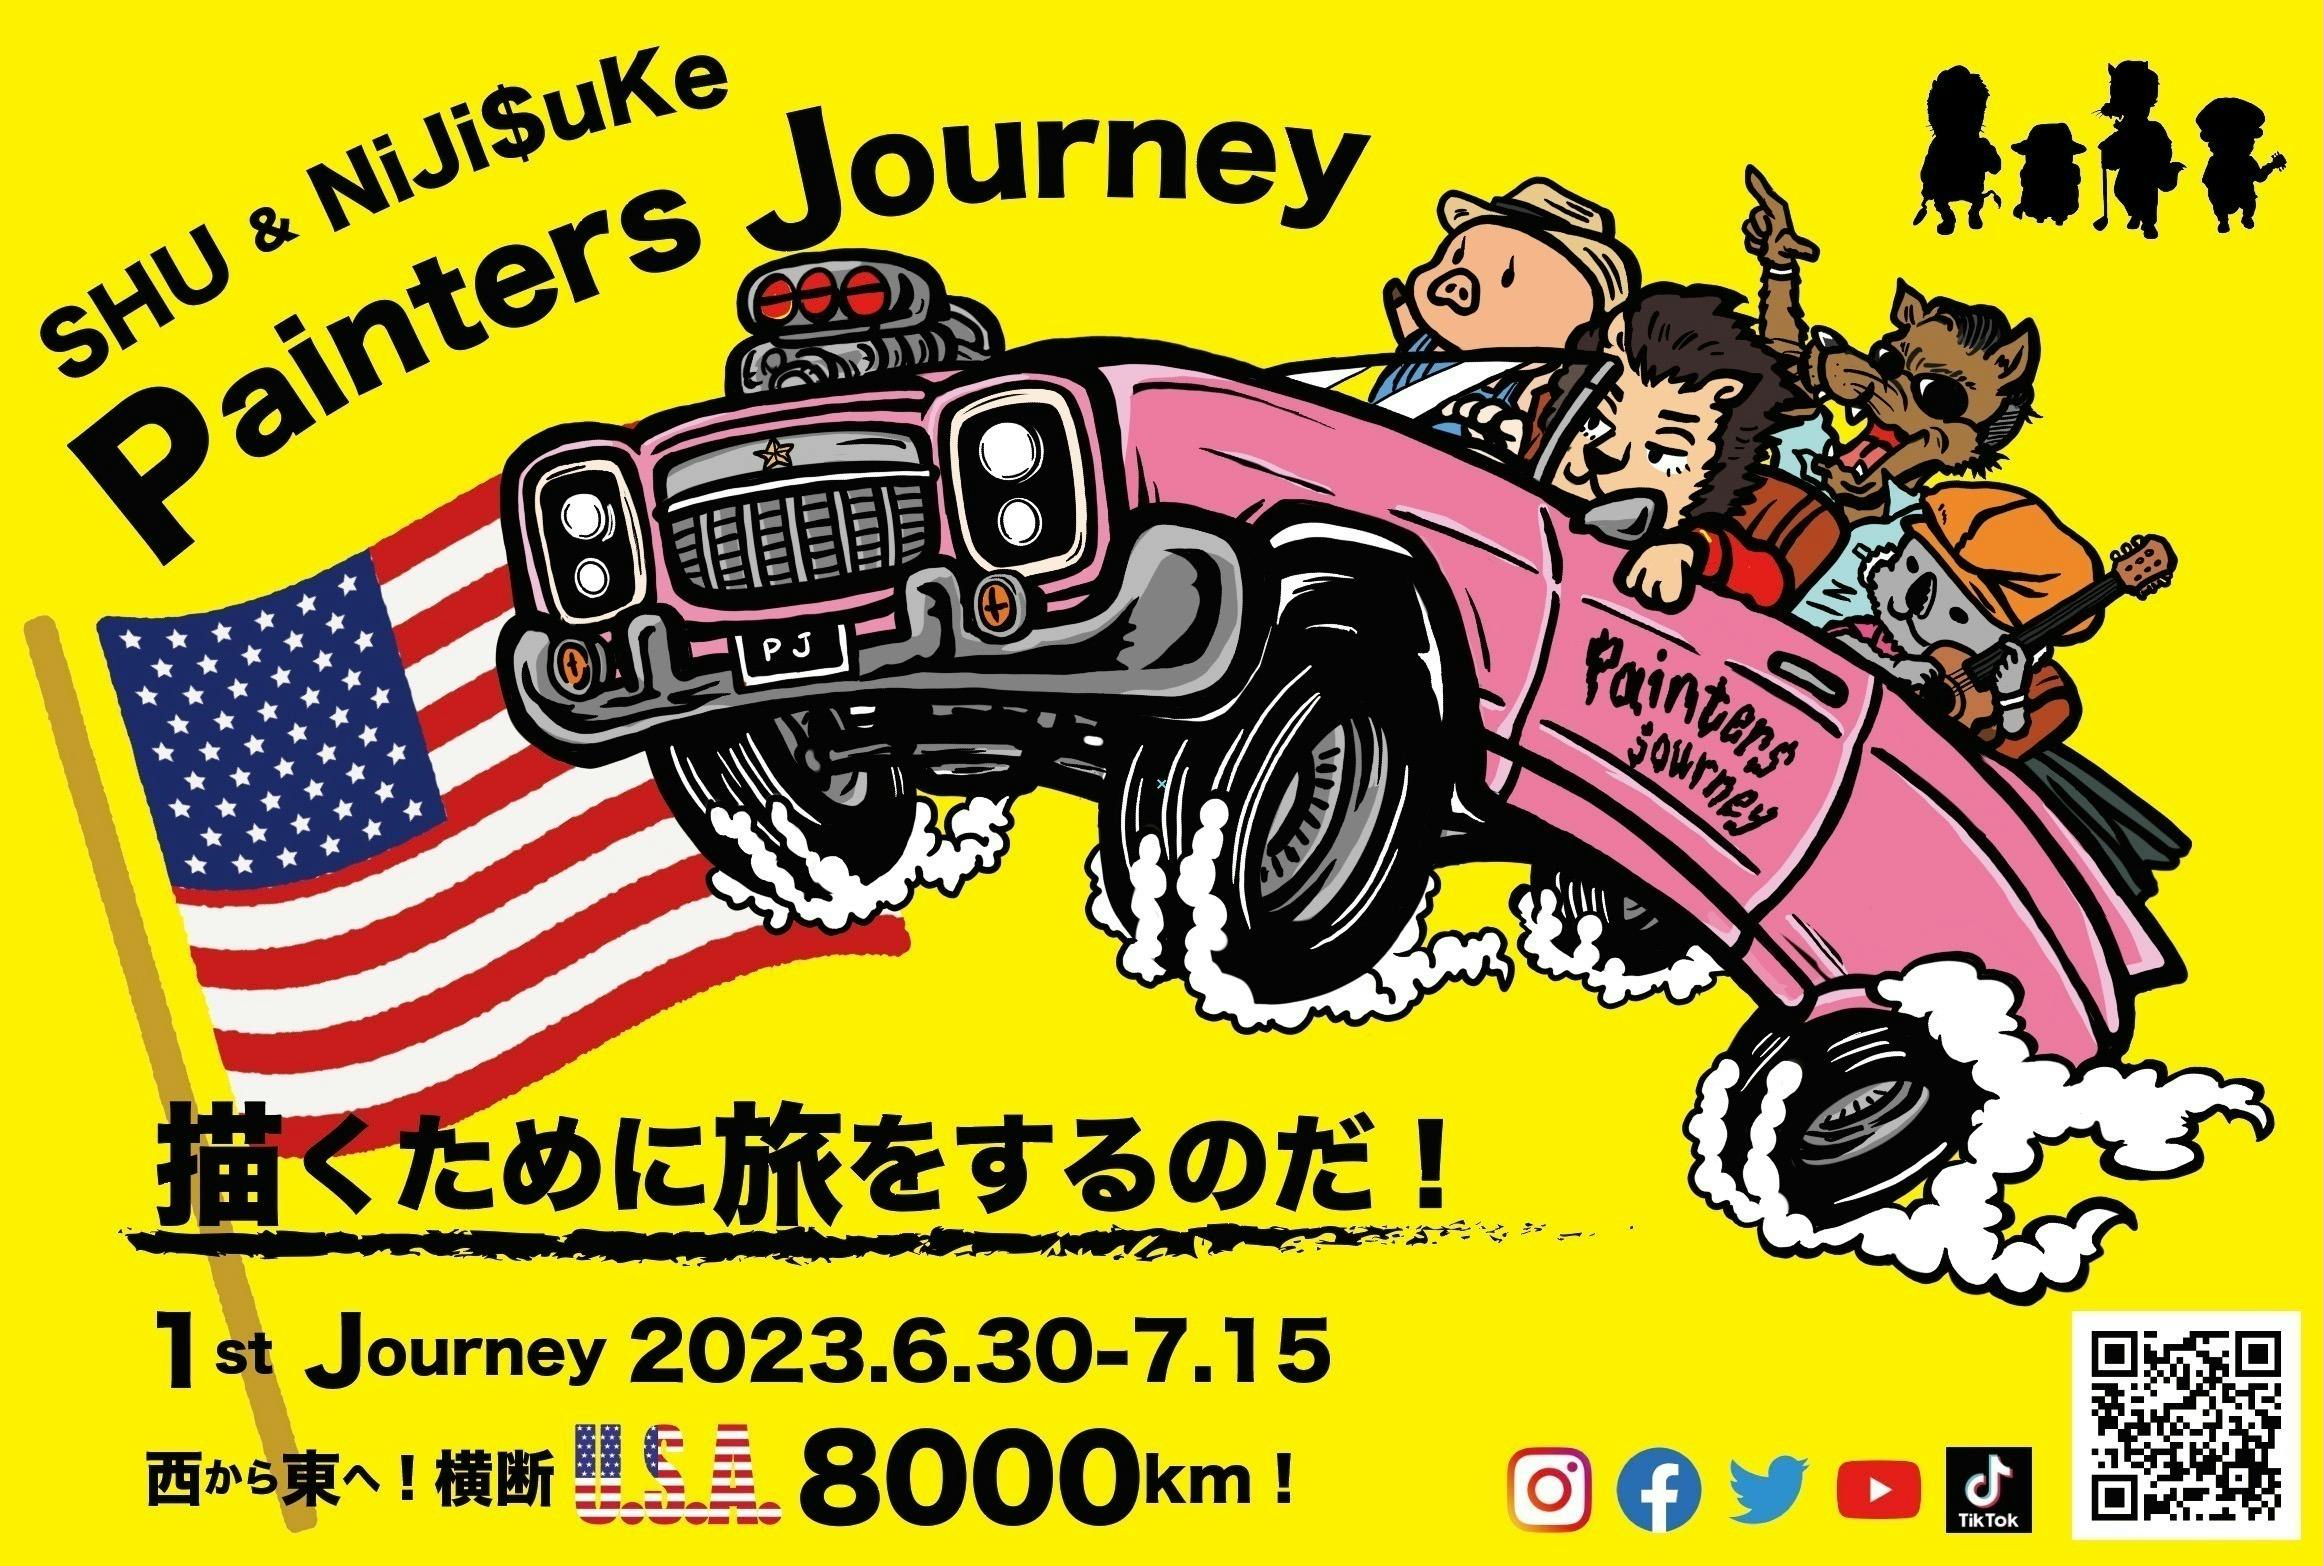 SHU & NiJi$uKe Painters Journey』 - CAMPFIRE (キャンプファイヤー)